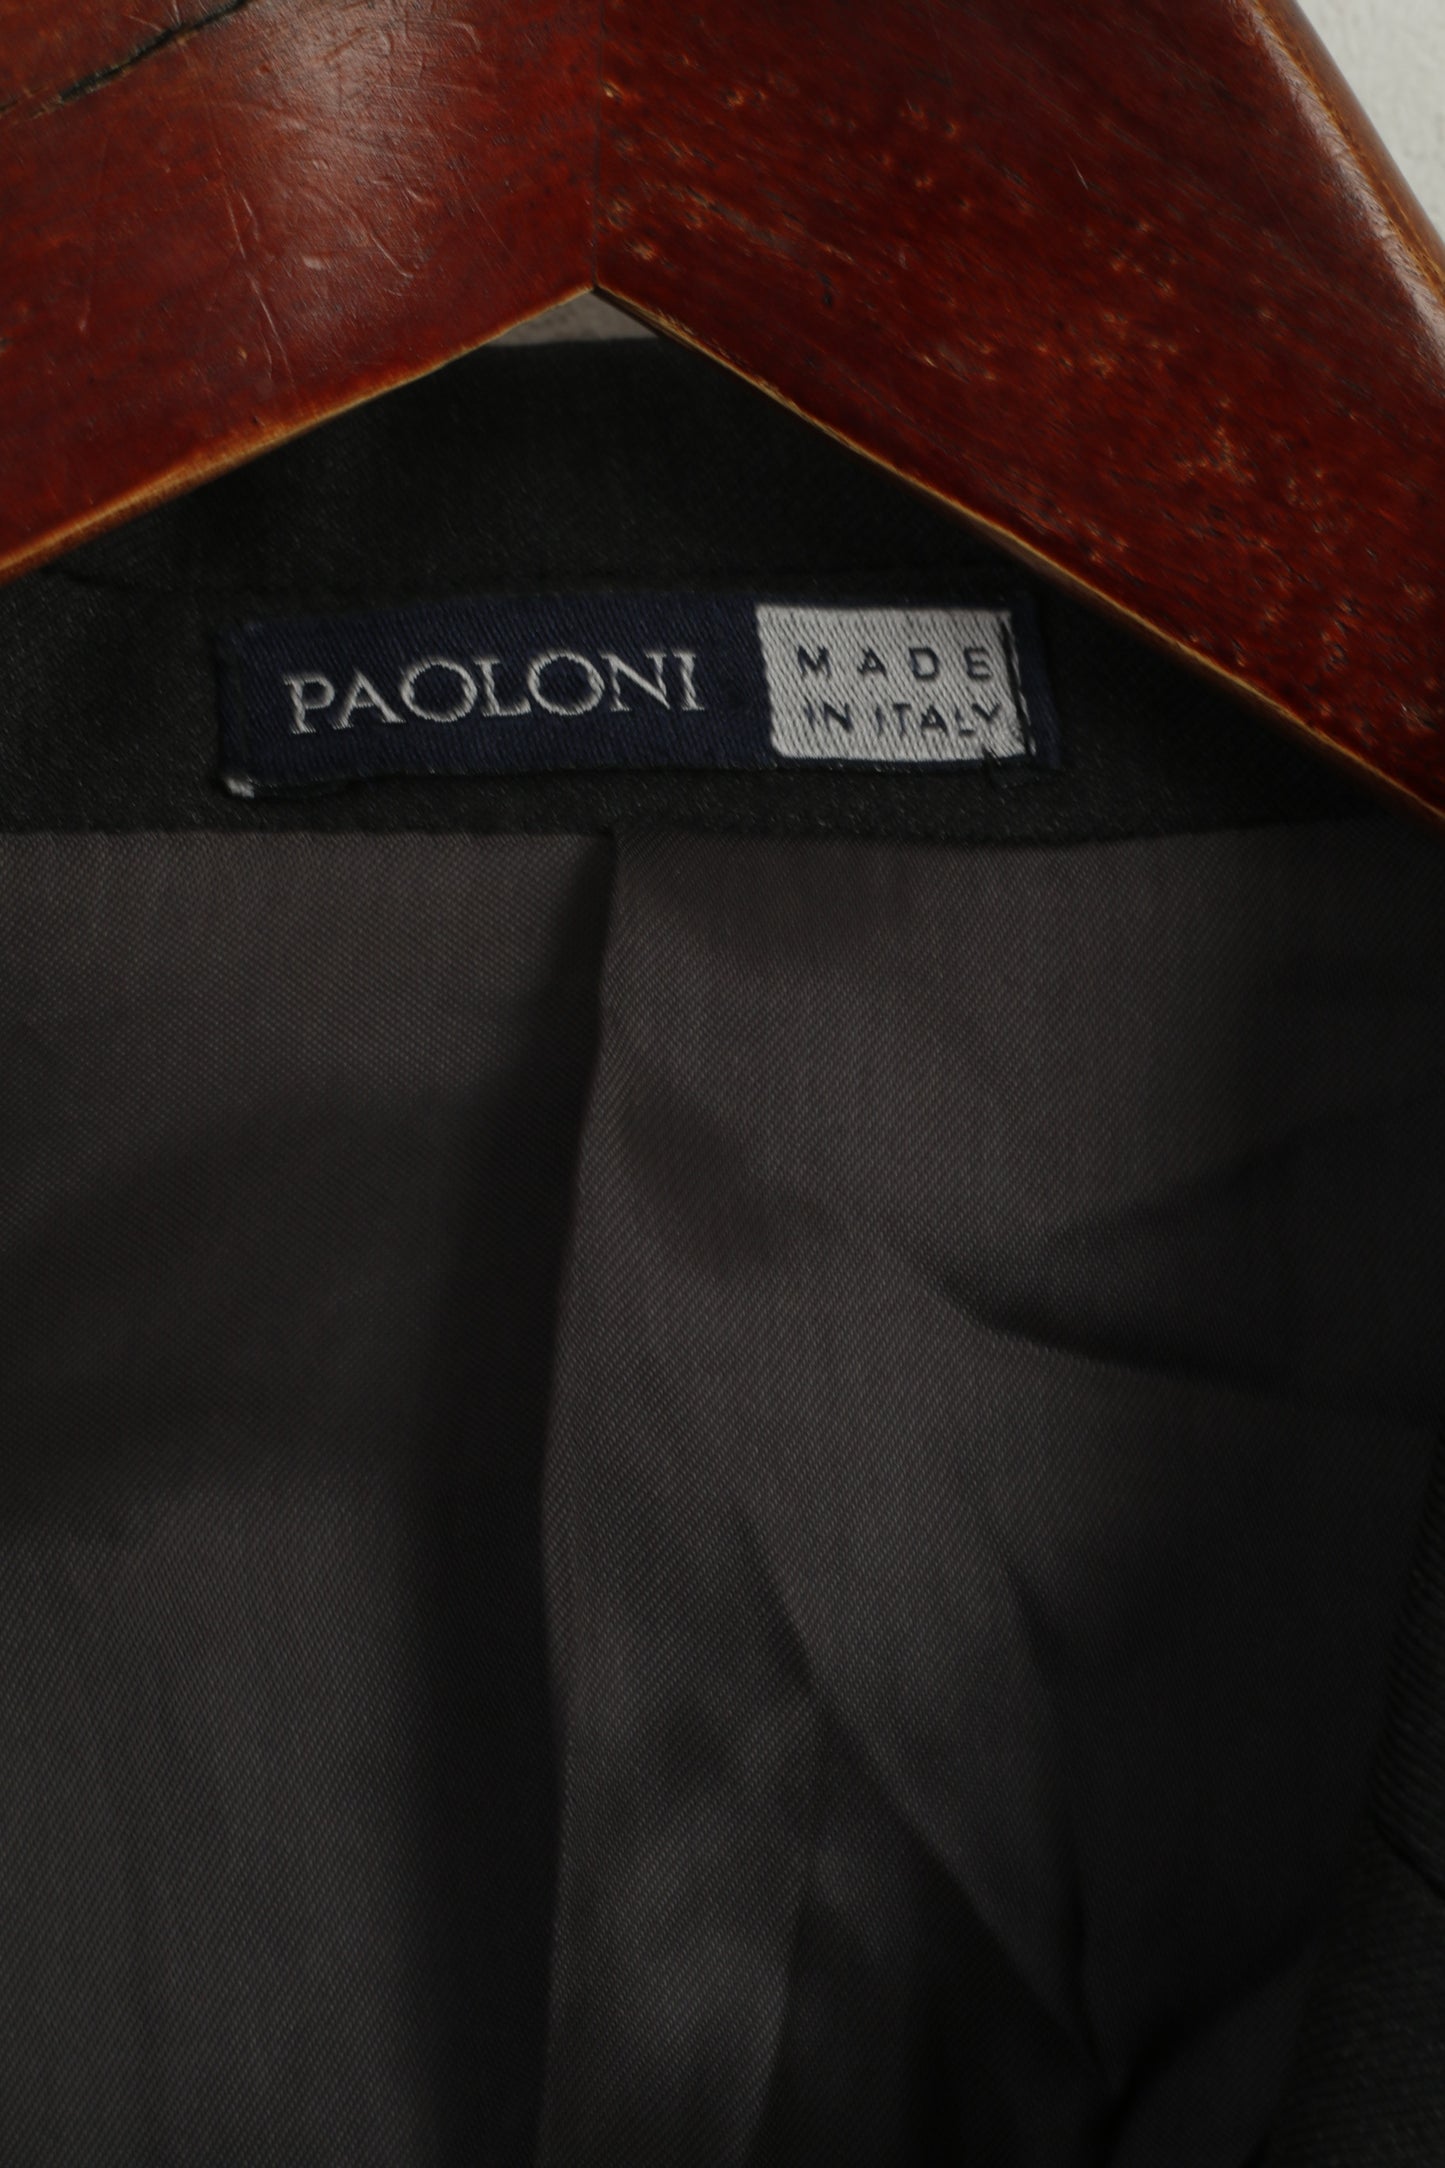 PAOLONI Homme 48 38 Blazer Laine Noire Cerruti 110's Veste Simple Boutonnage Made in Italy